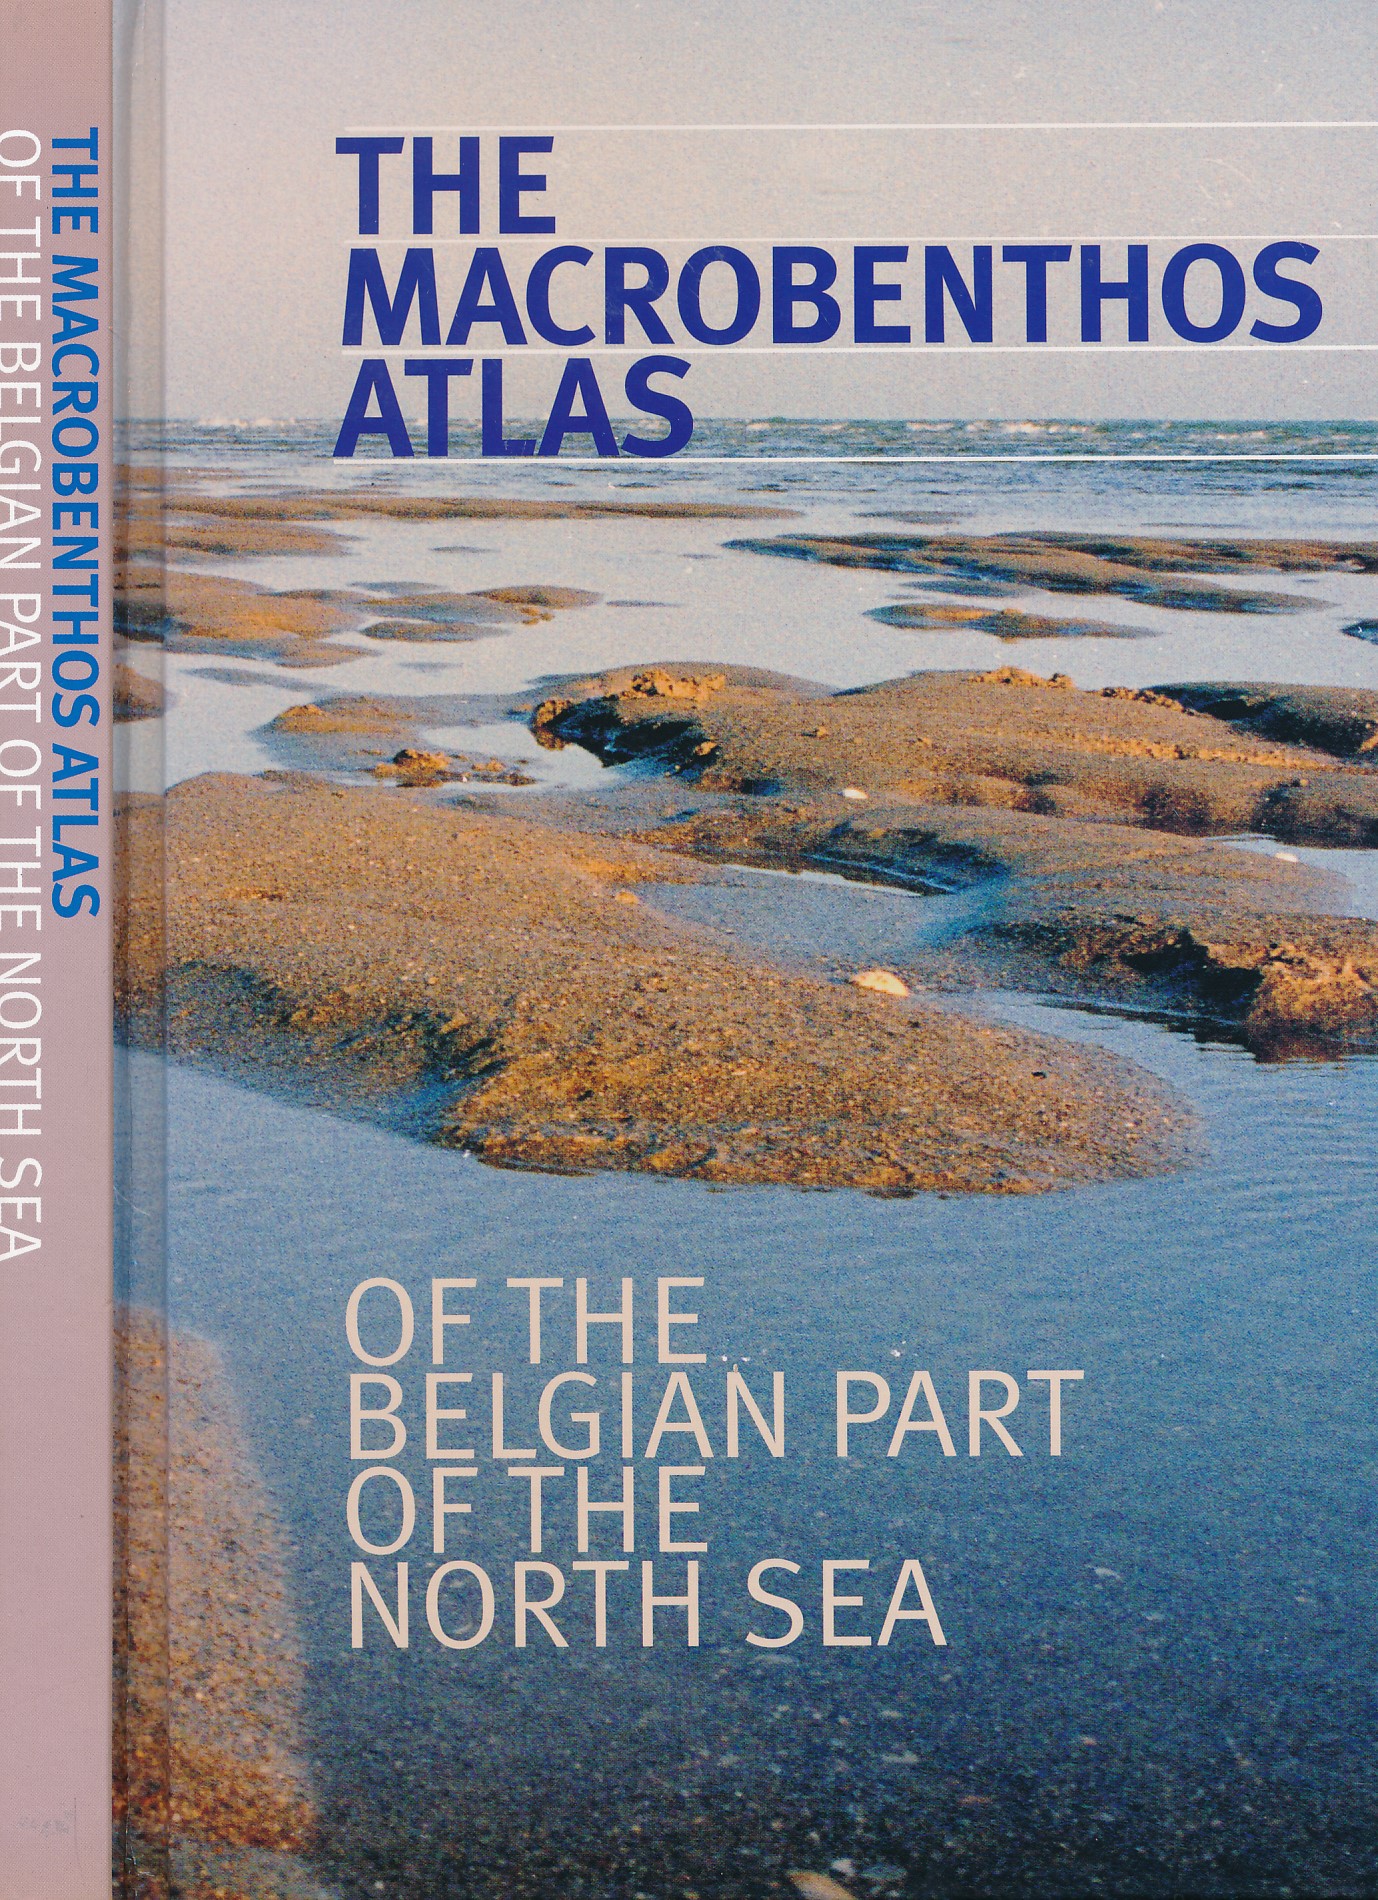 The Macrobenthos Atlas of the Belgian Part of the North Sea